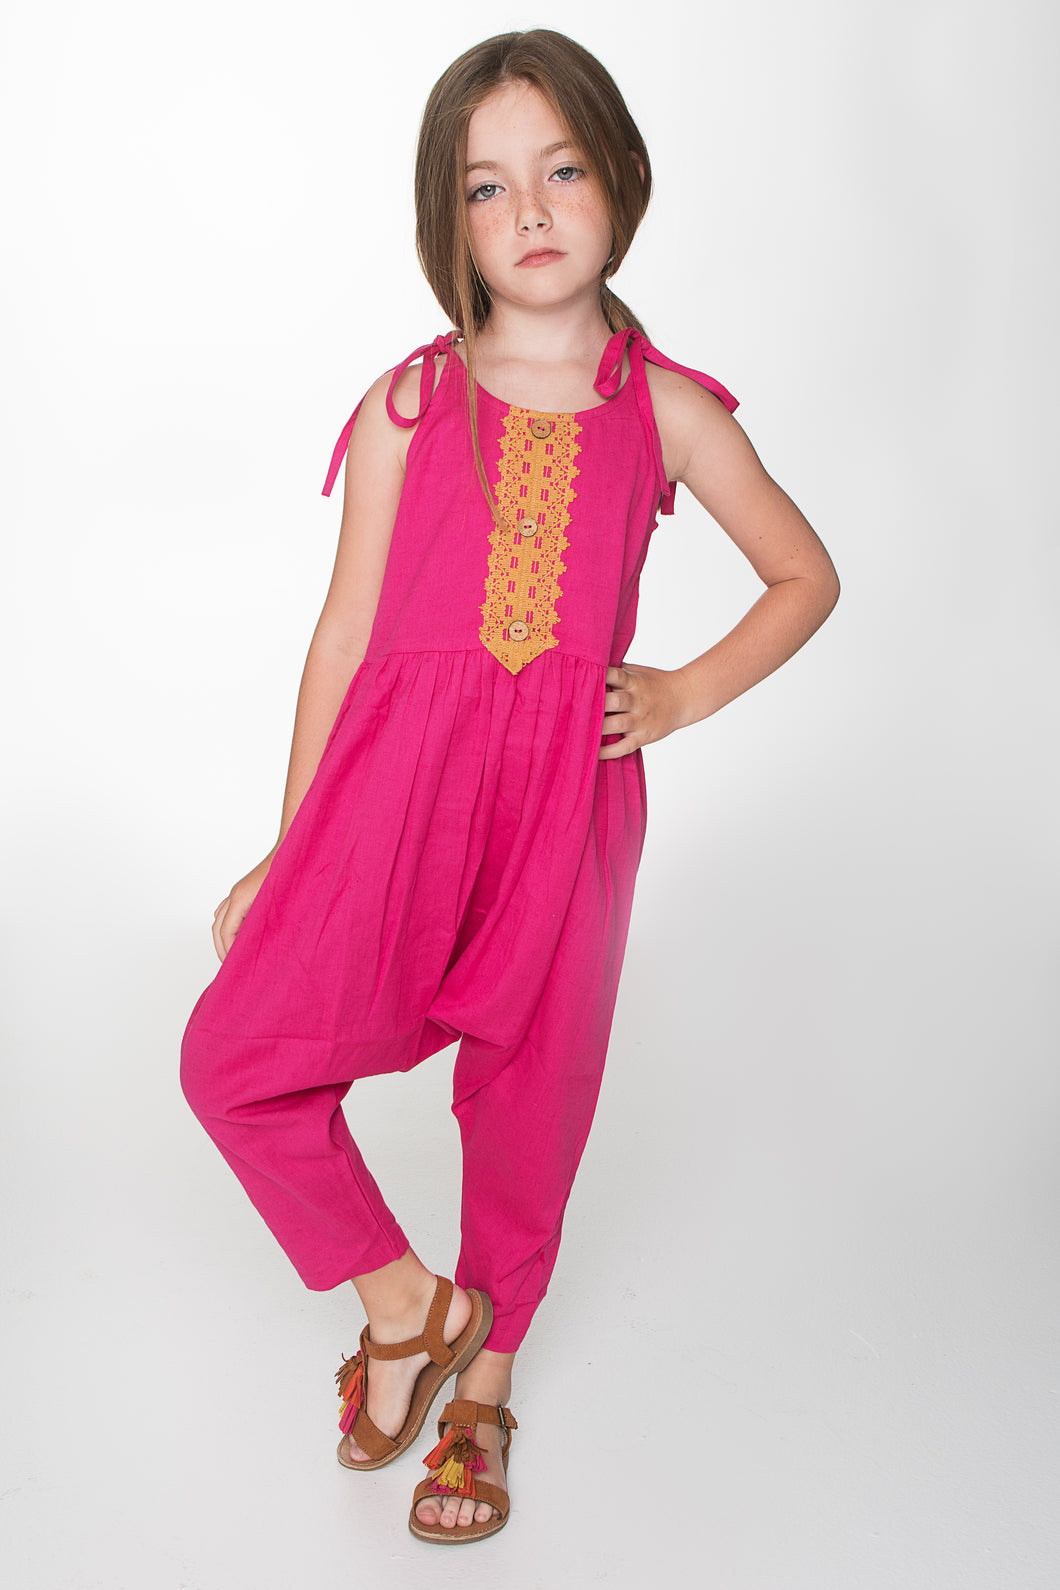 Hot Pink Jumpsuit with Lace Detail - Kids Wholesale Boutique Clothing, Dress - Girls Dresses, Yo Baby Wholesale - Yo Baby